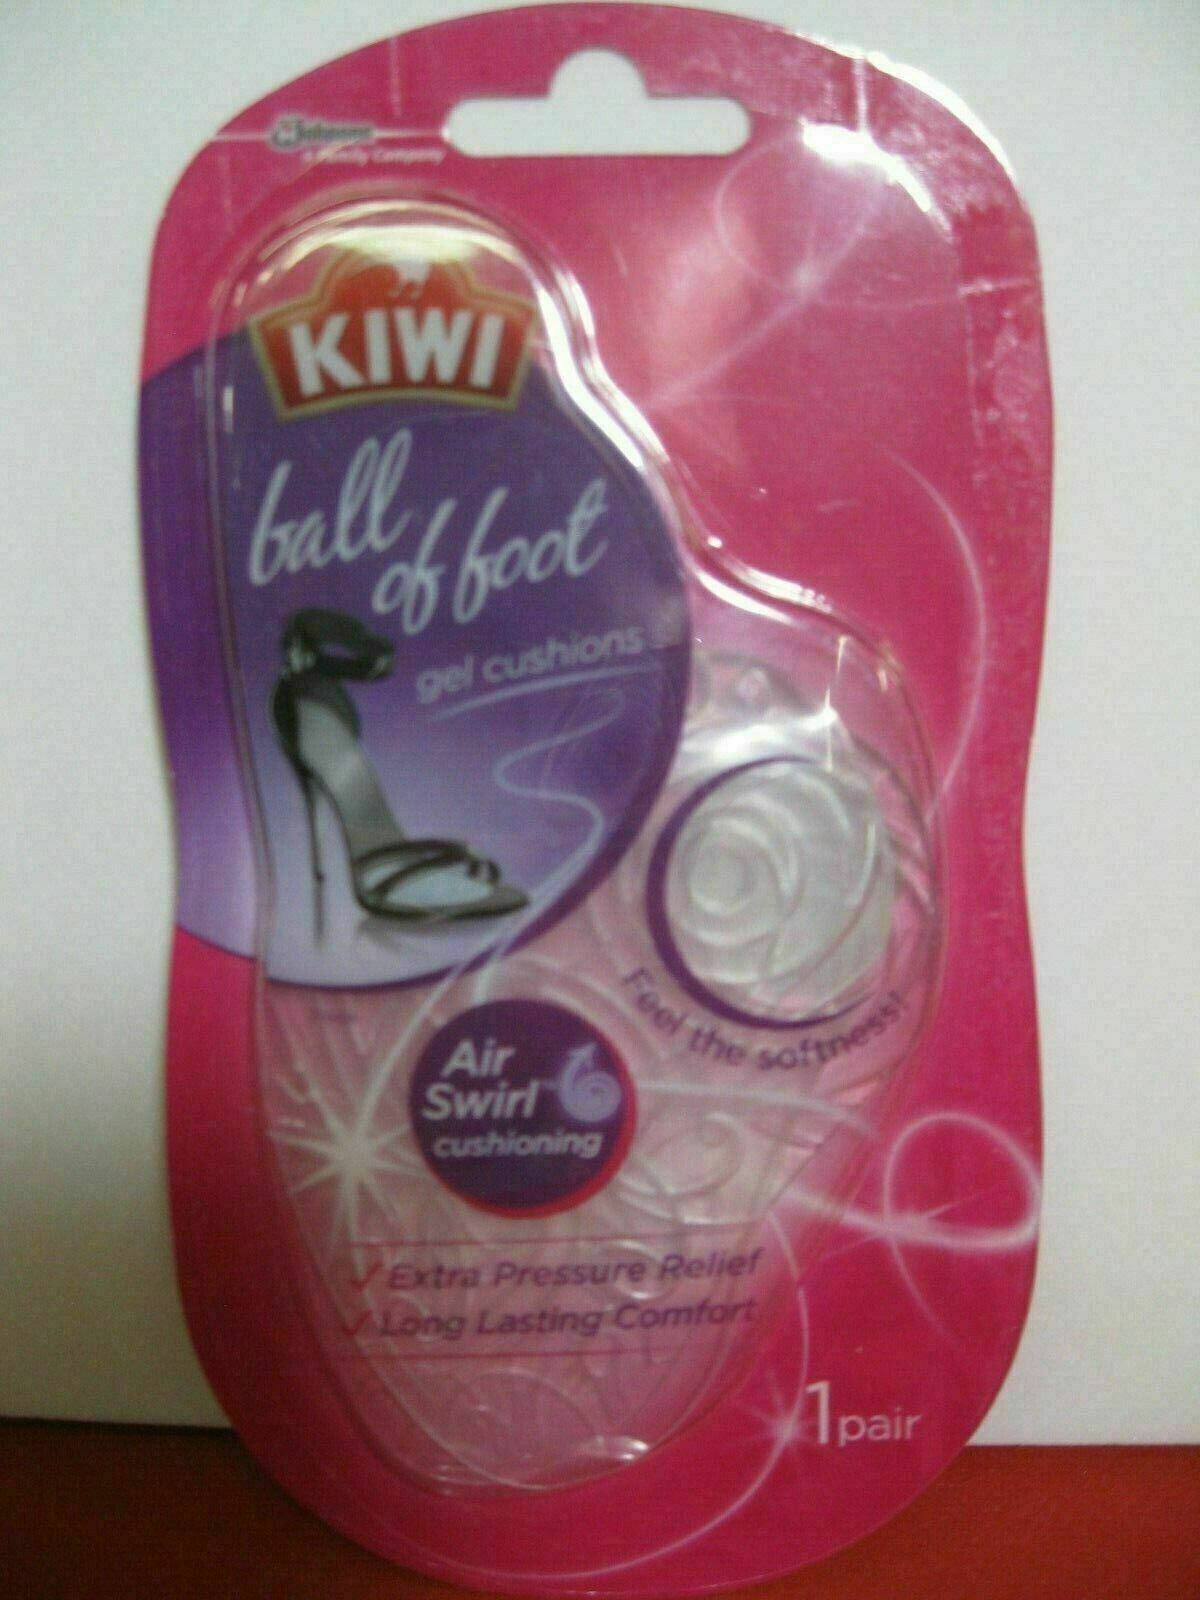 KIWI Women's Comfort Gel Cushions High-Heel Ball of Foot Pads - 1 Pair Air Swirl